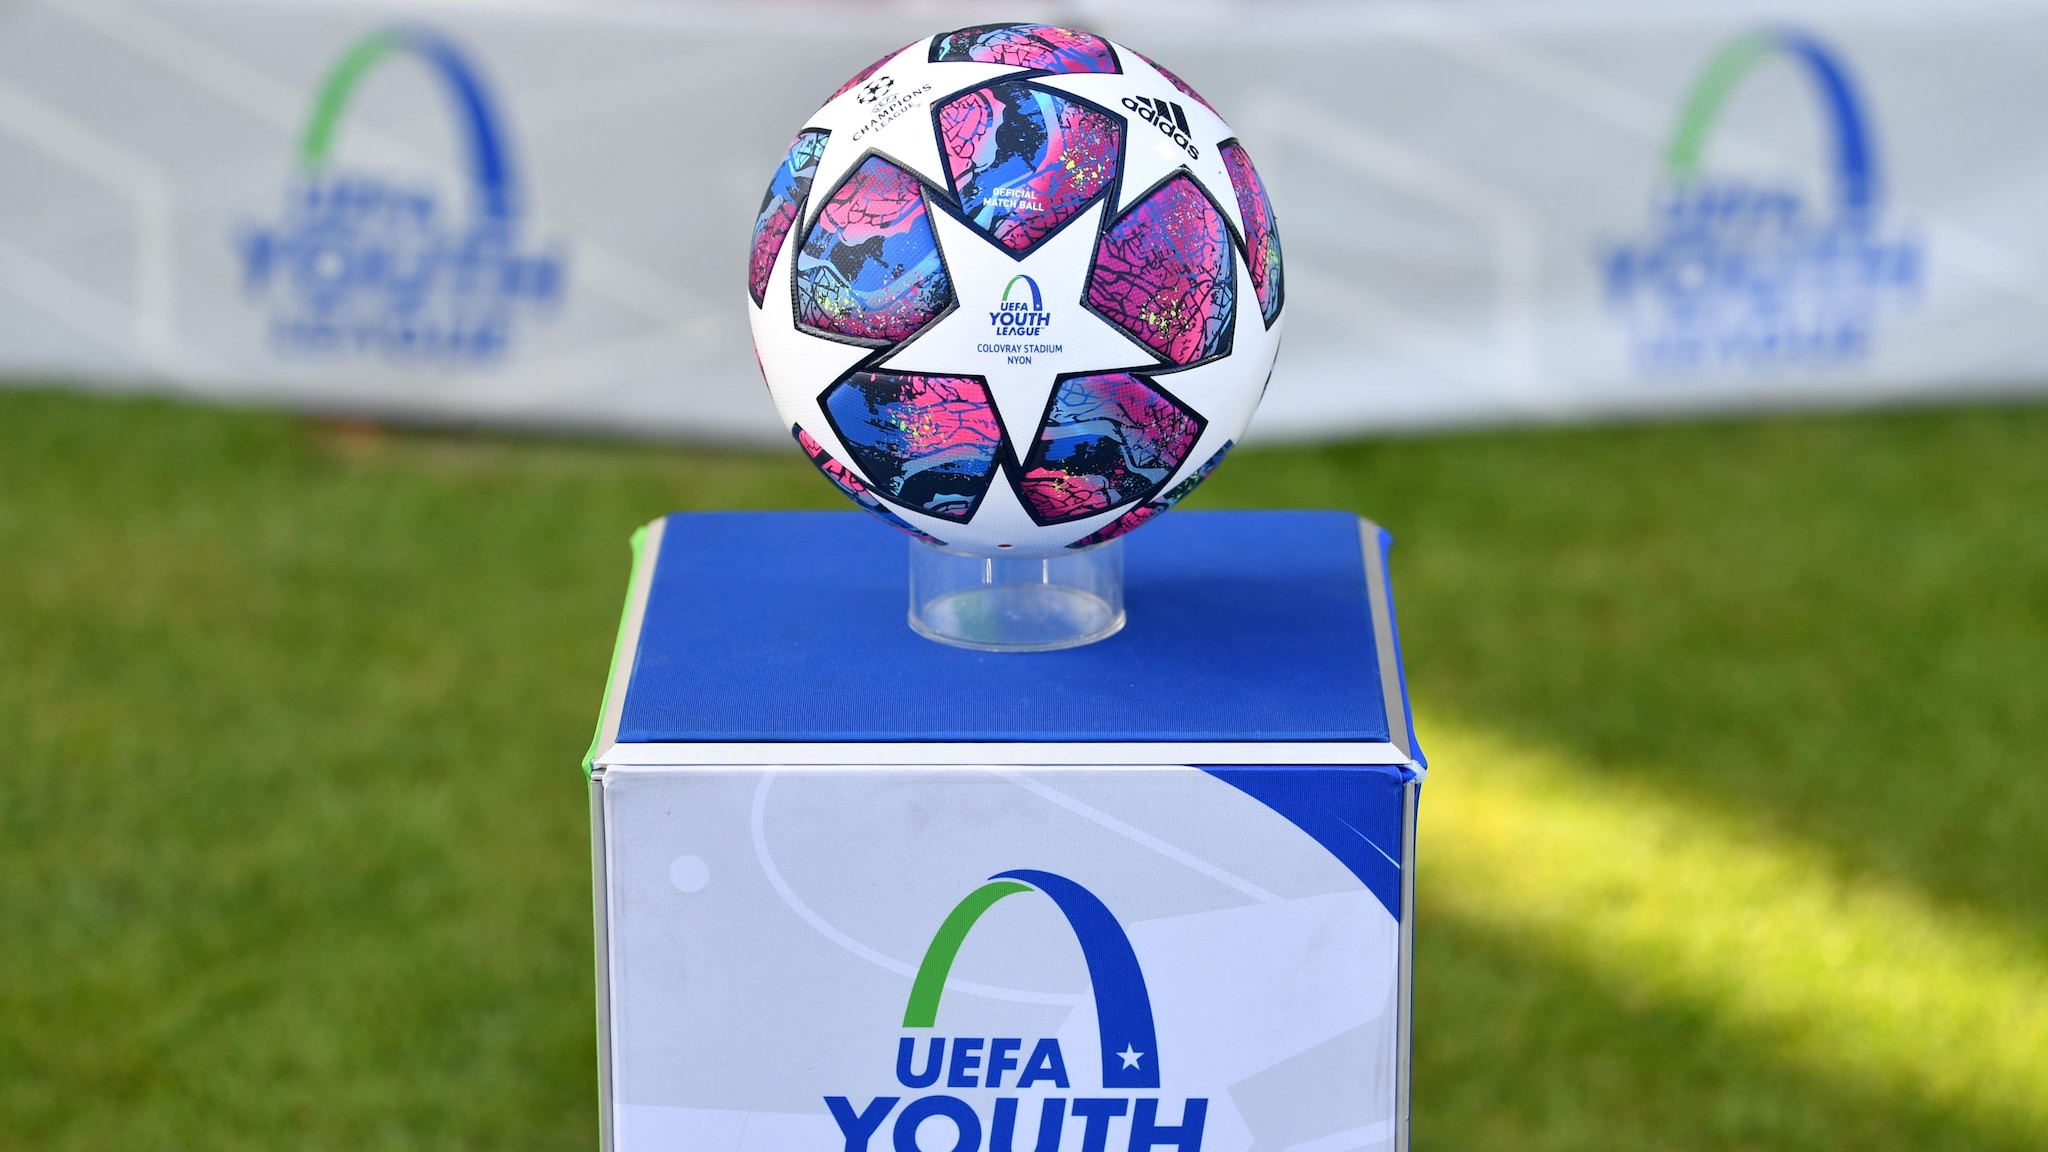 UEFA Youth League. Юношеская лига УЕФА трофей. Трофей юниорская лига УЕФА. UEFA Youth League logo. Юношеская уефа